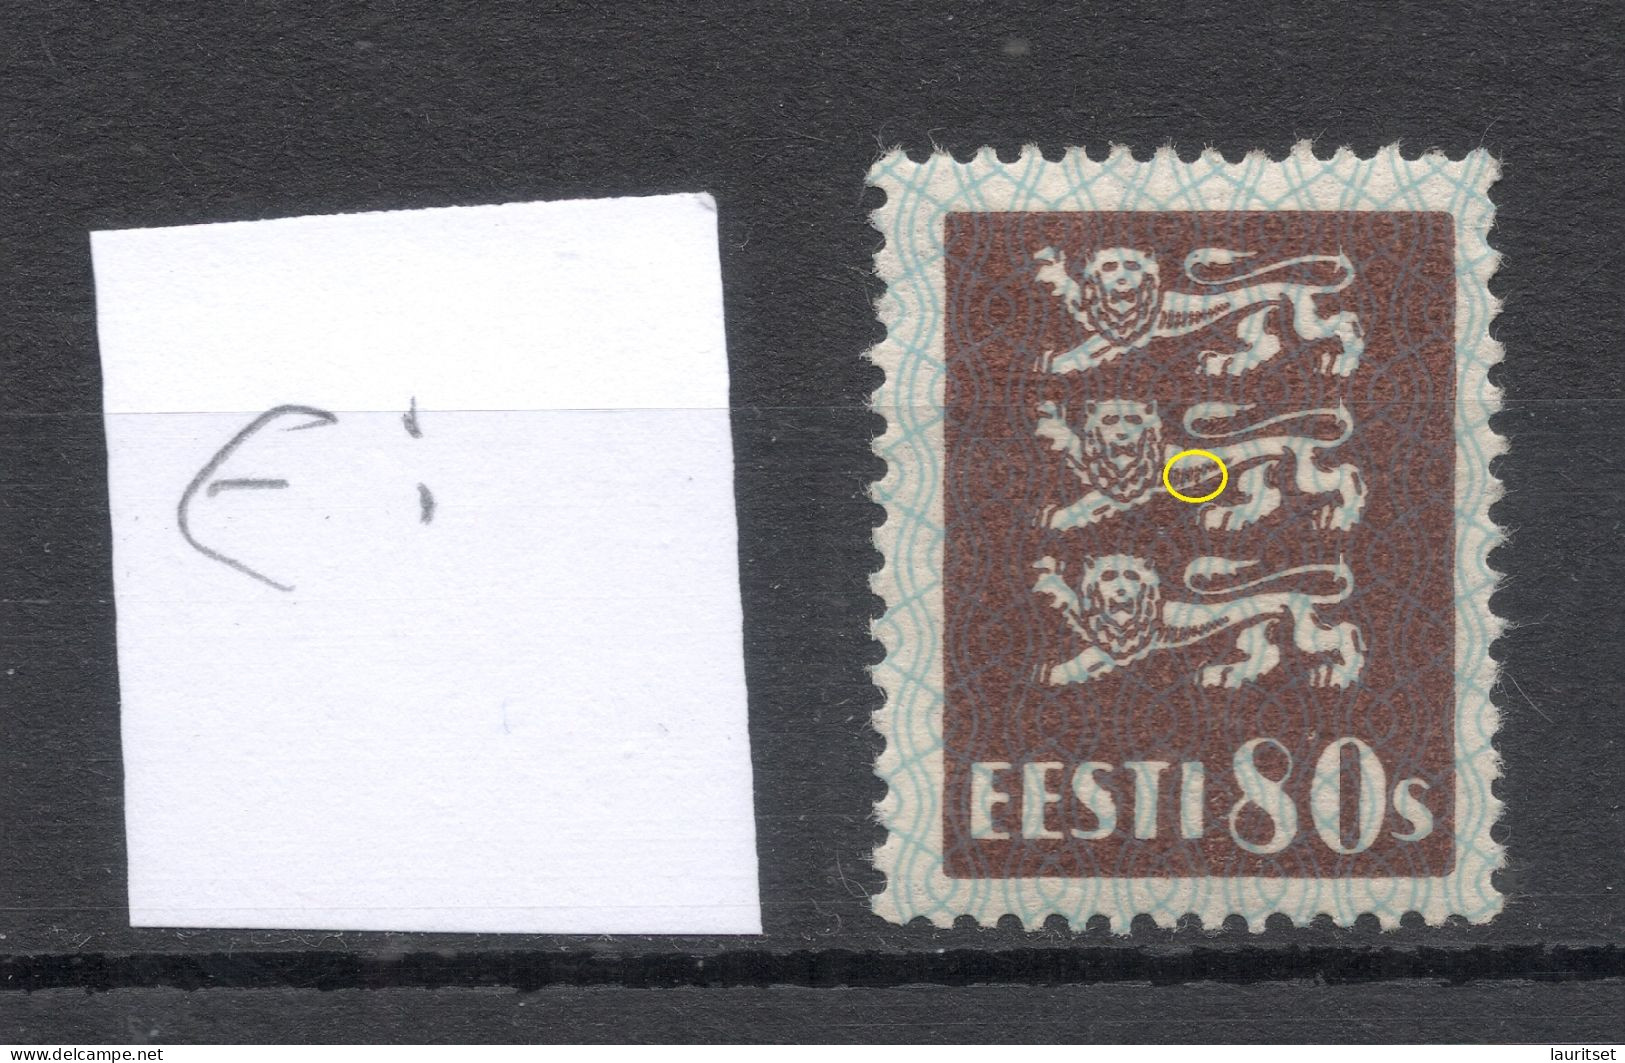 ESTLAND Estonia 1929 Michel 86 * ERROR Variety - Estonie